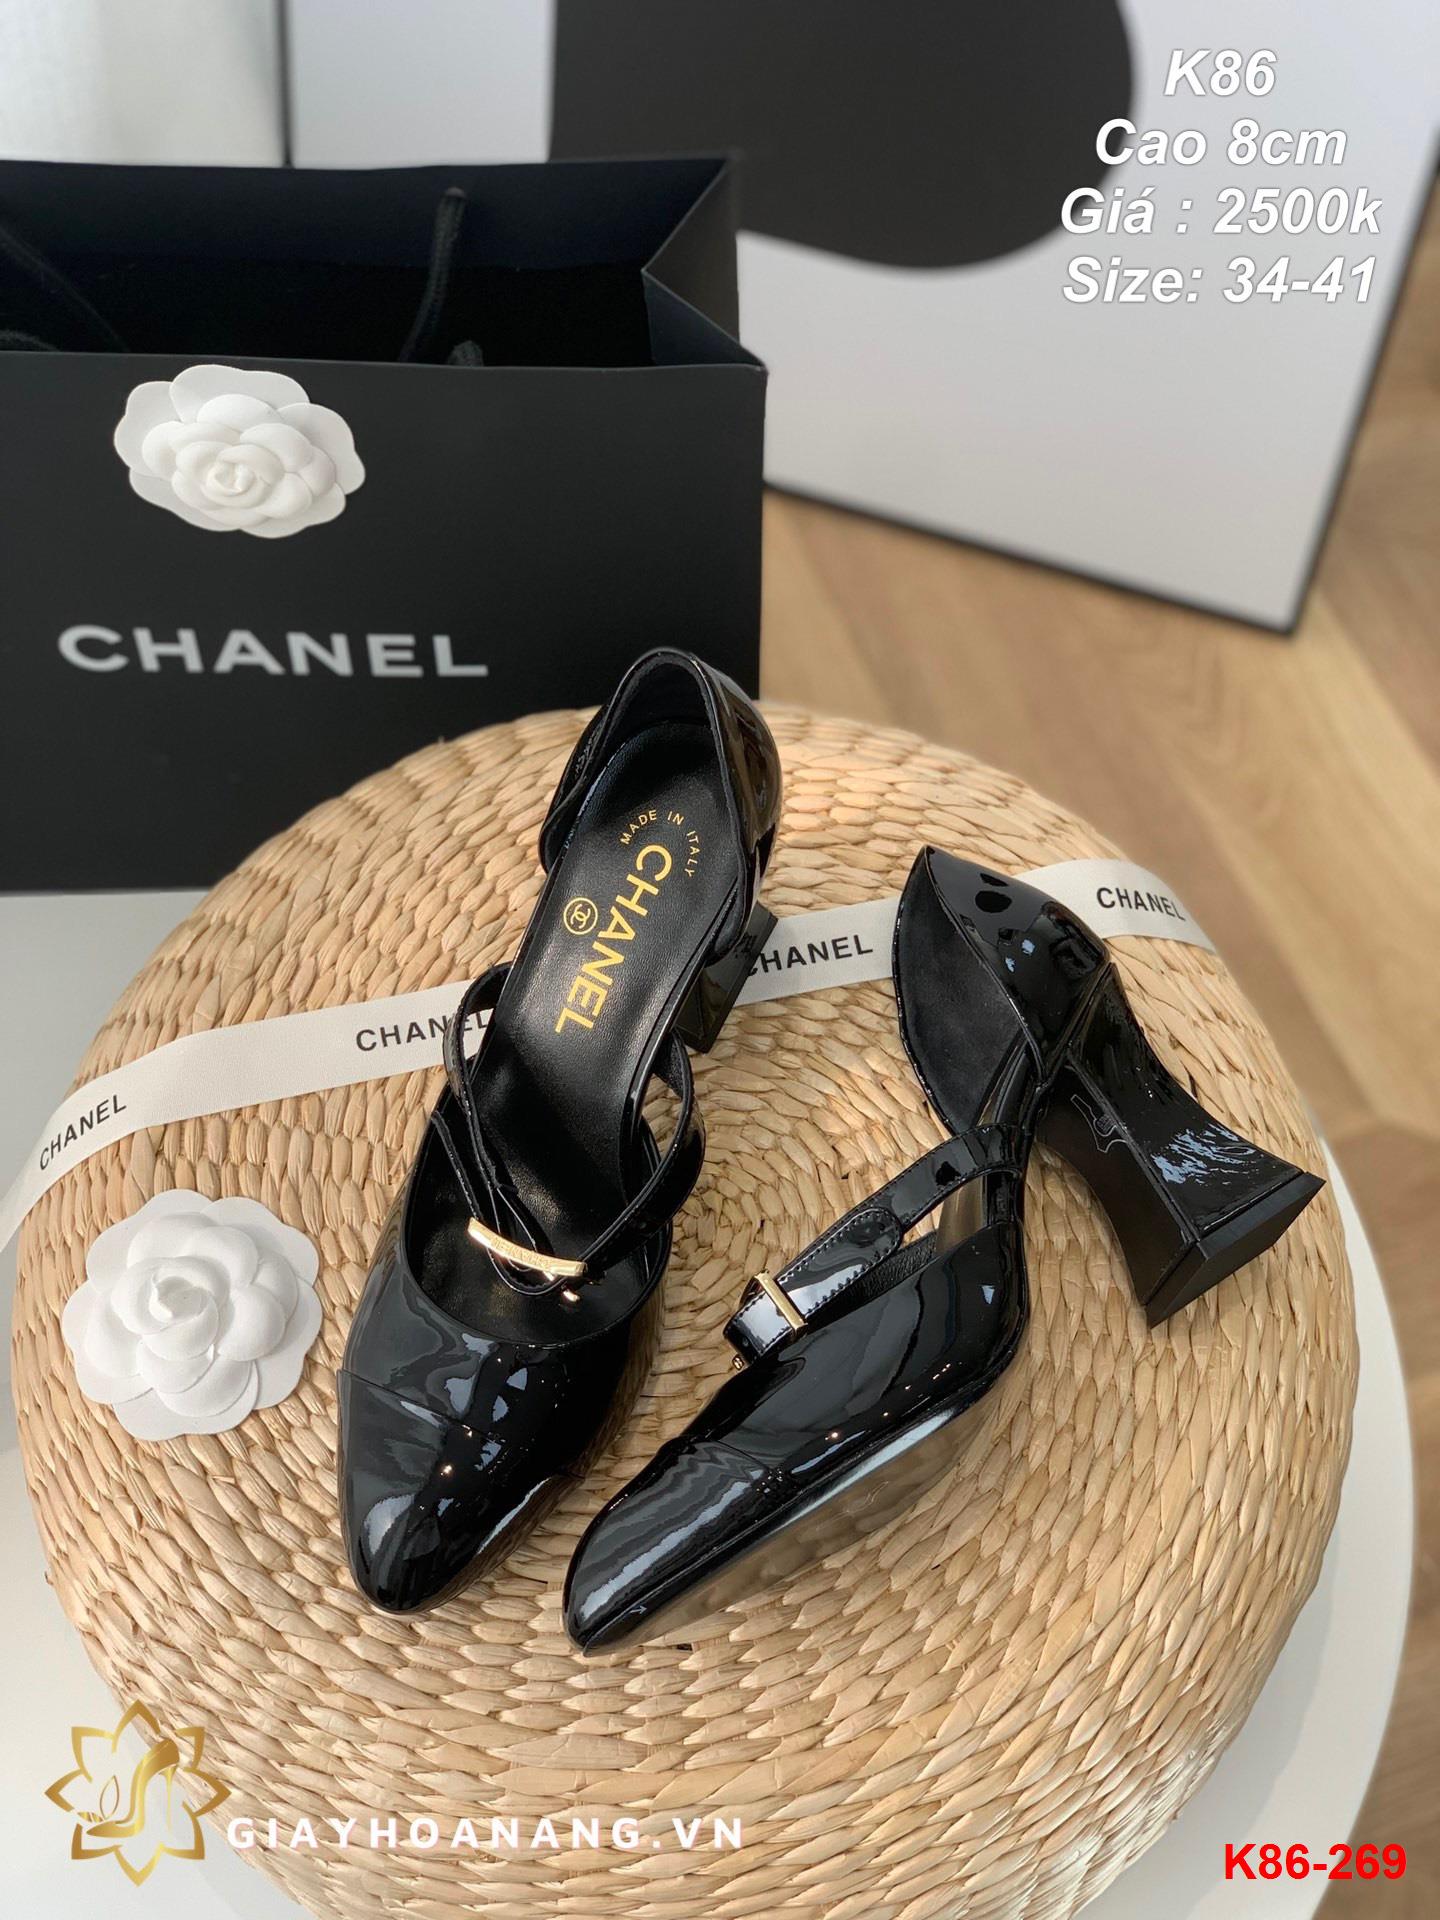 K86-269 Chanel sandal cao 8cm siêu cấp